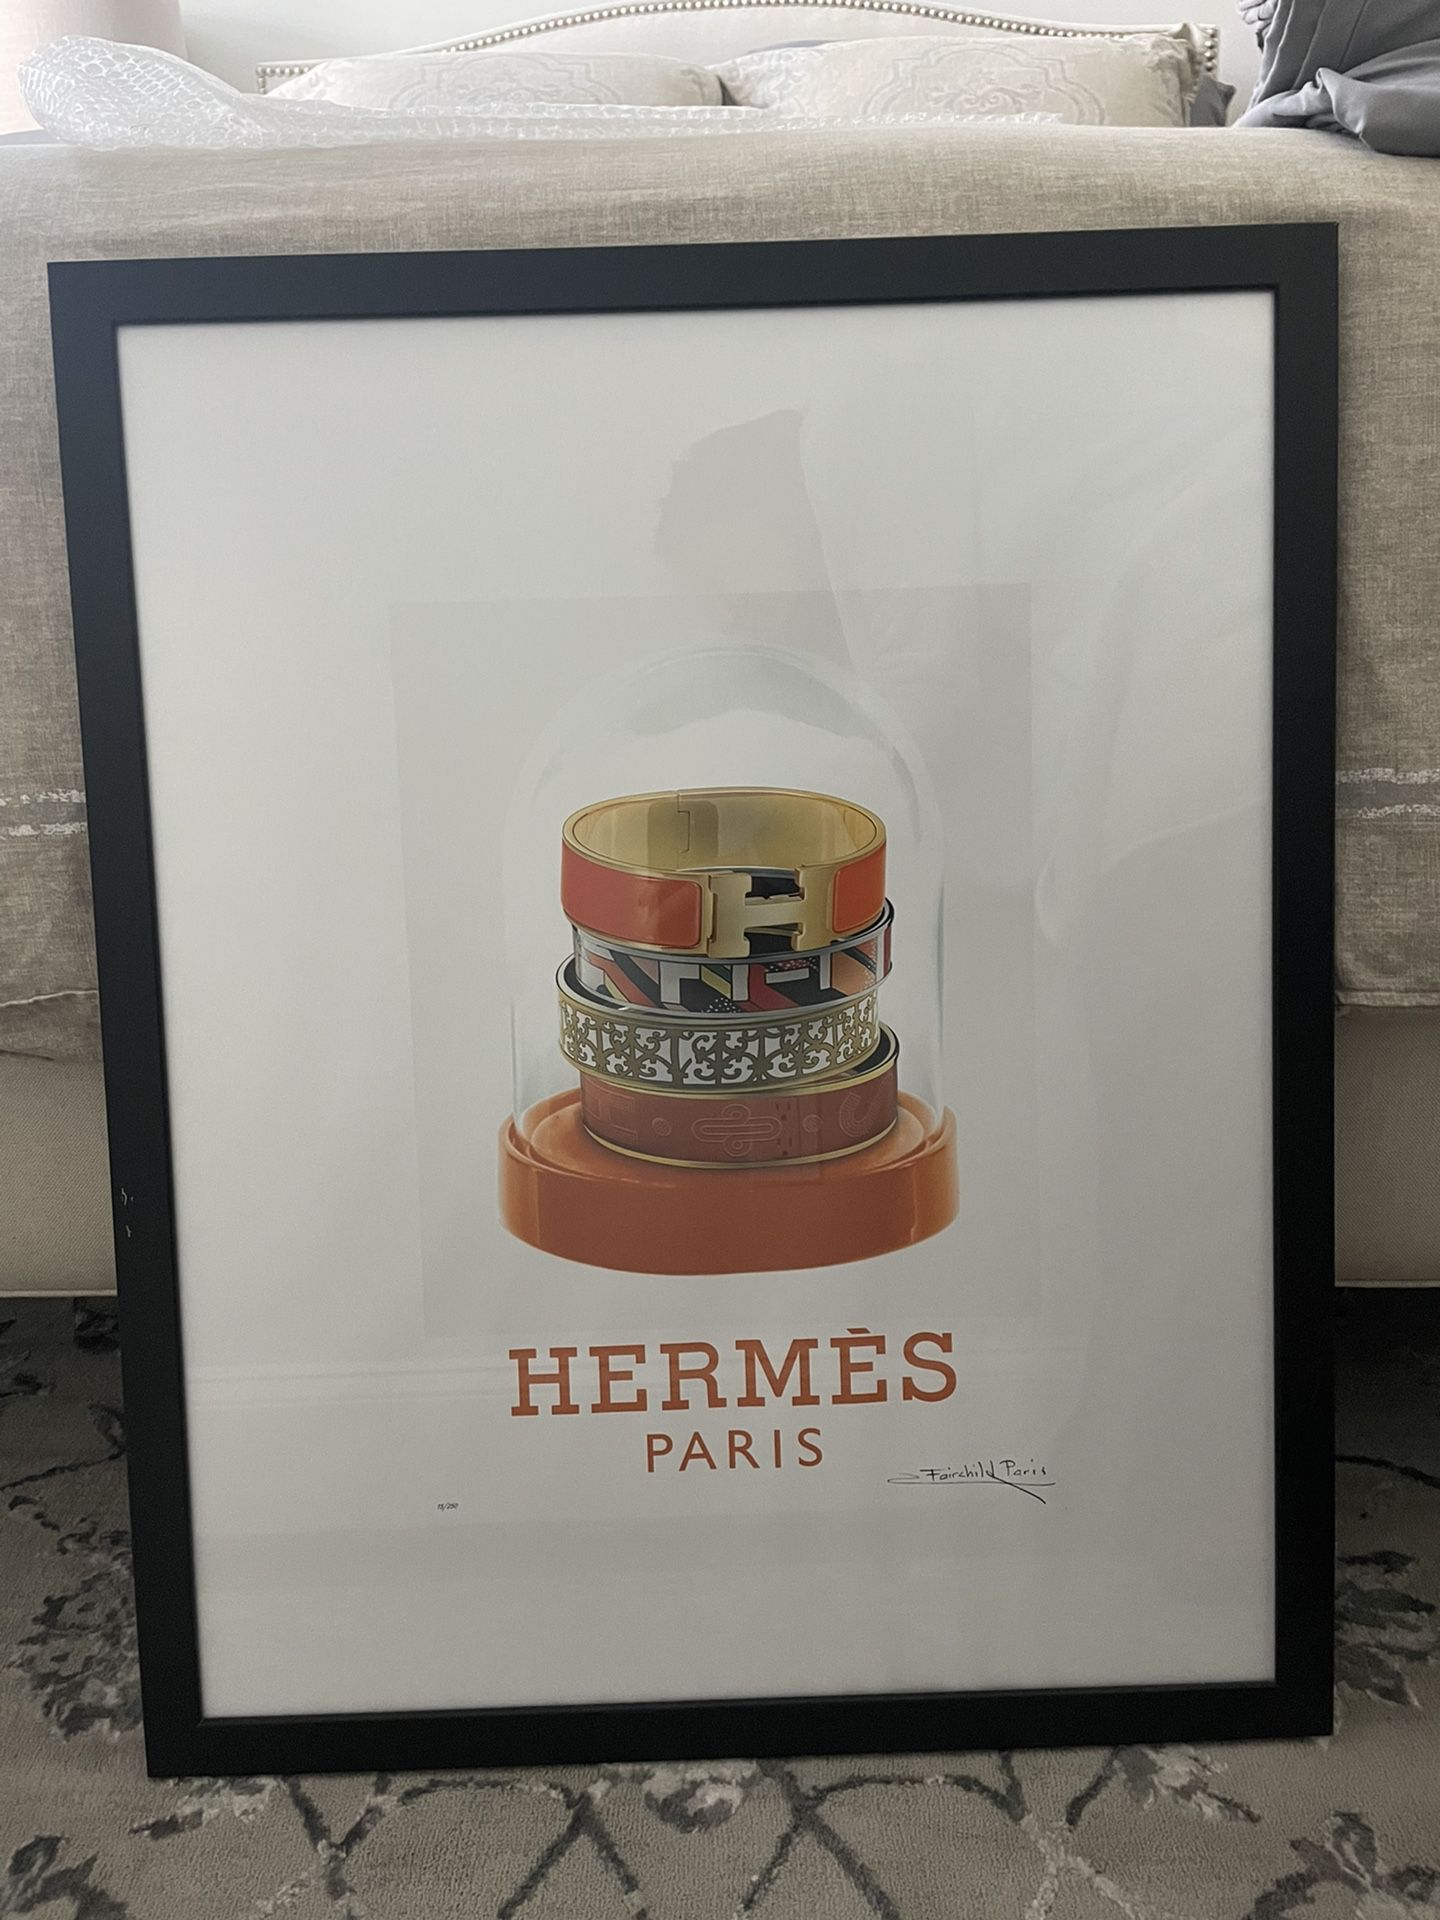 Hermes Fairchild Paris Framed Picture